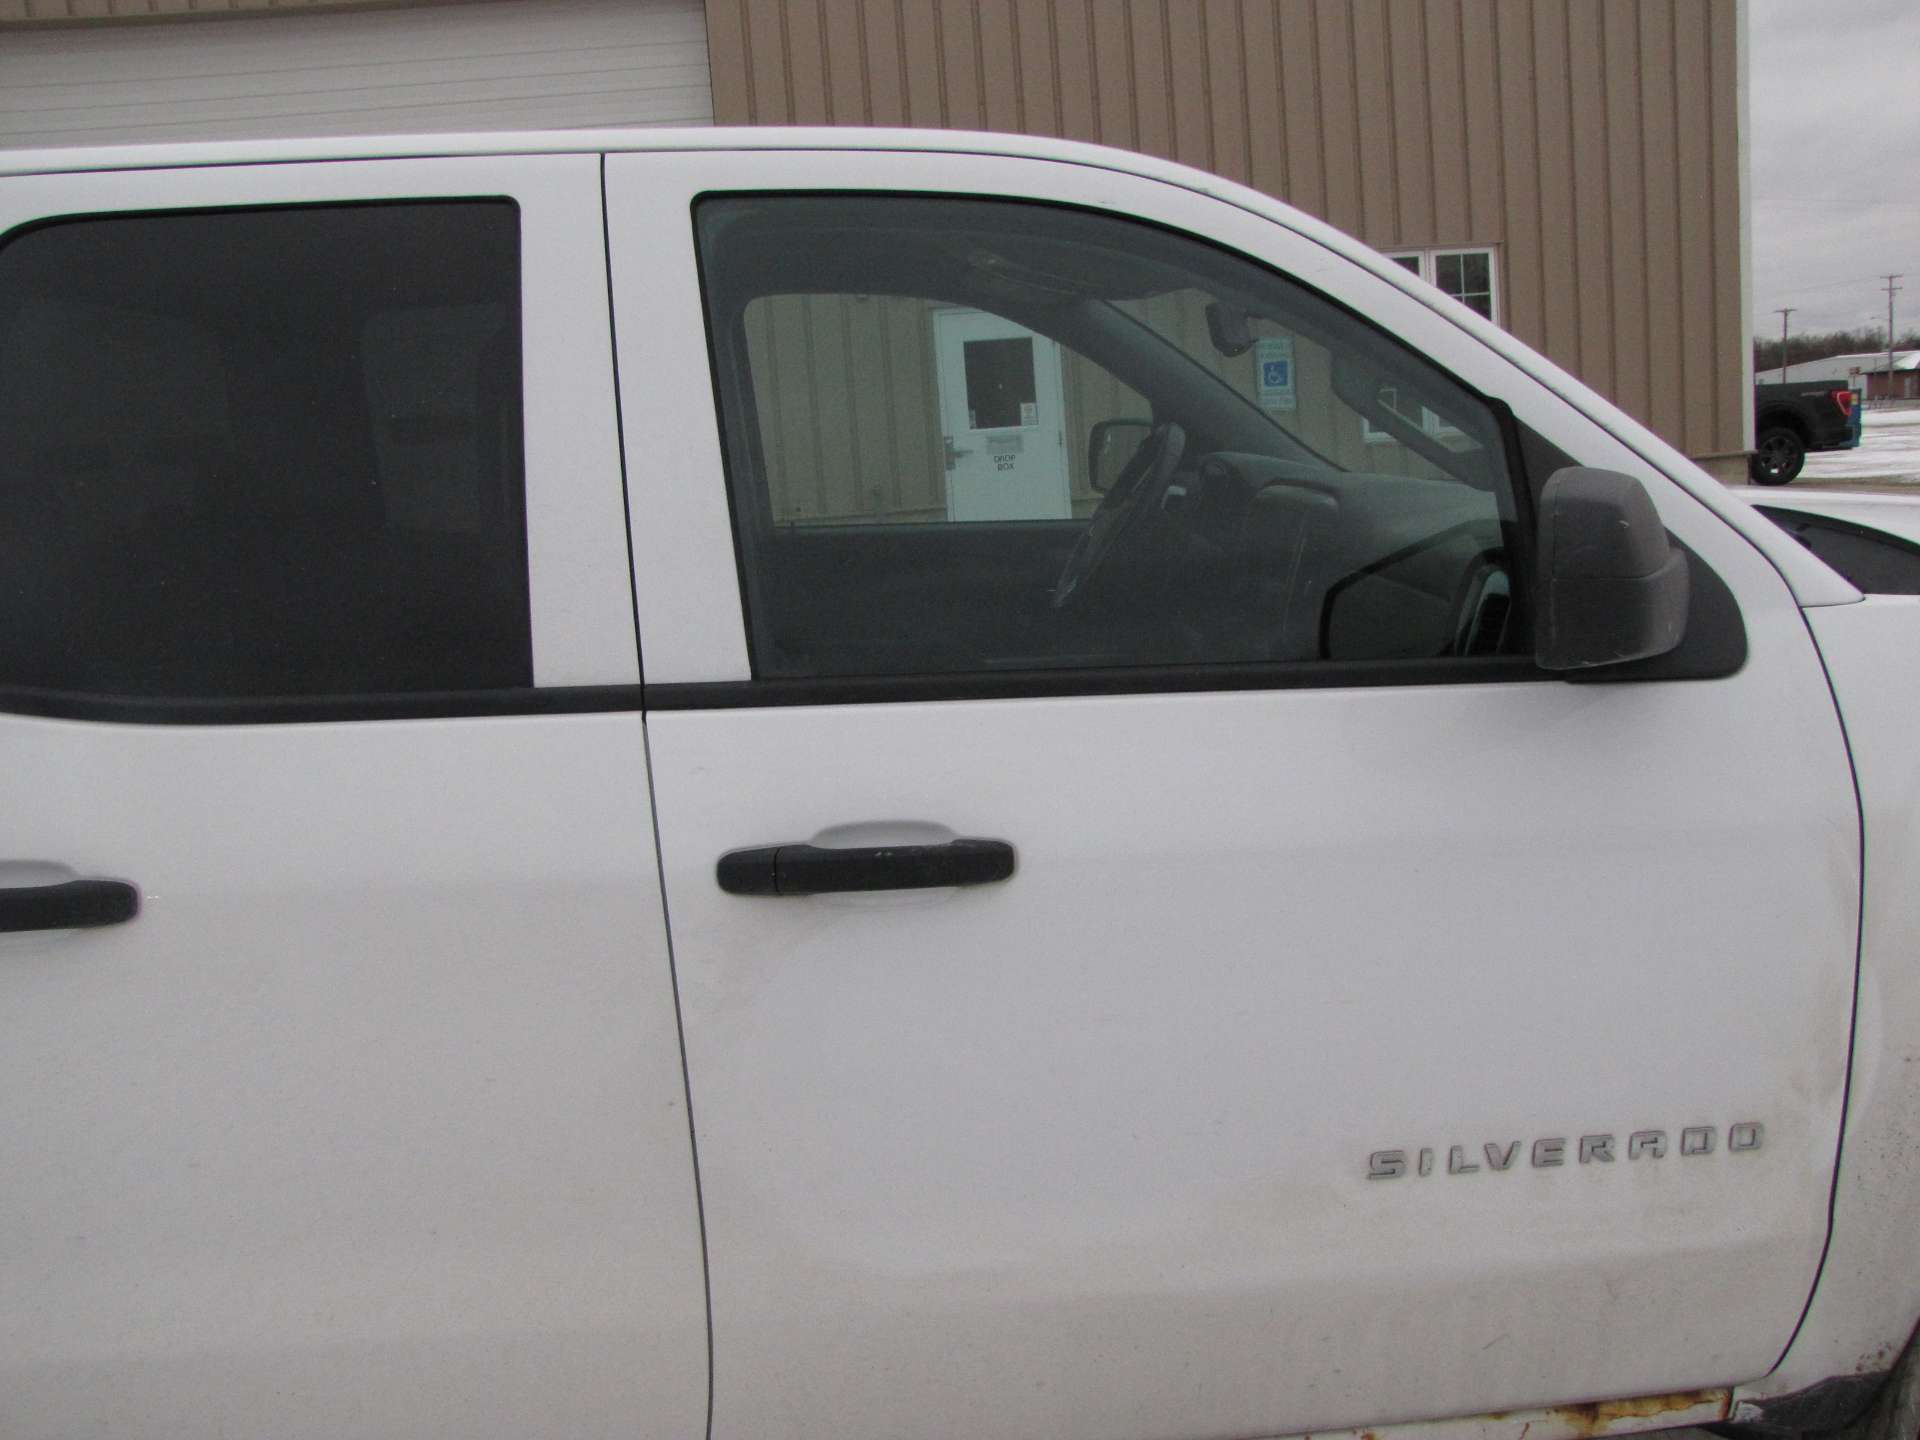 2014 Chevy Silverado 1500 pickup truck - Image 38 of 55